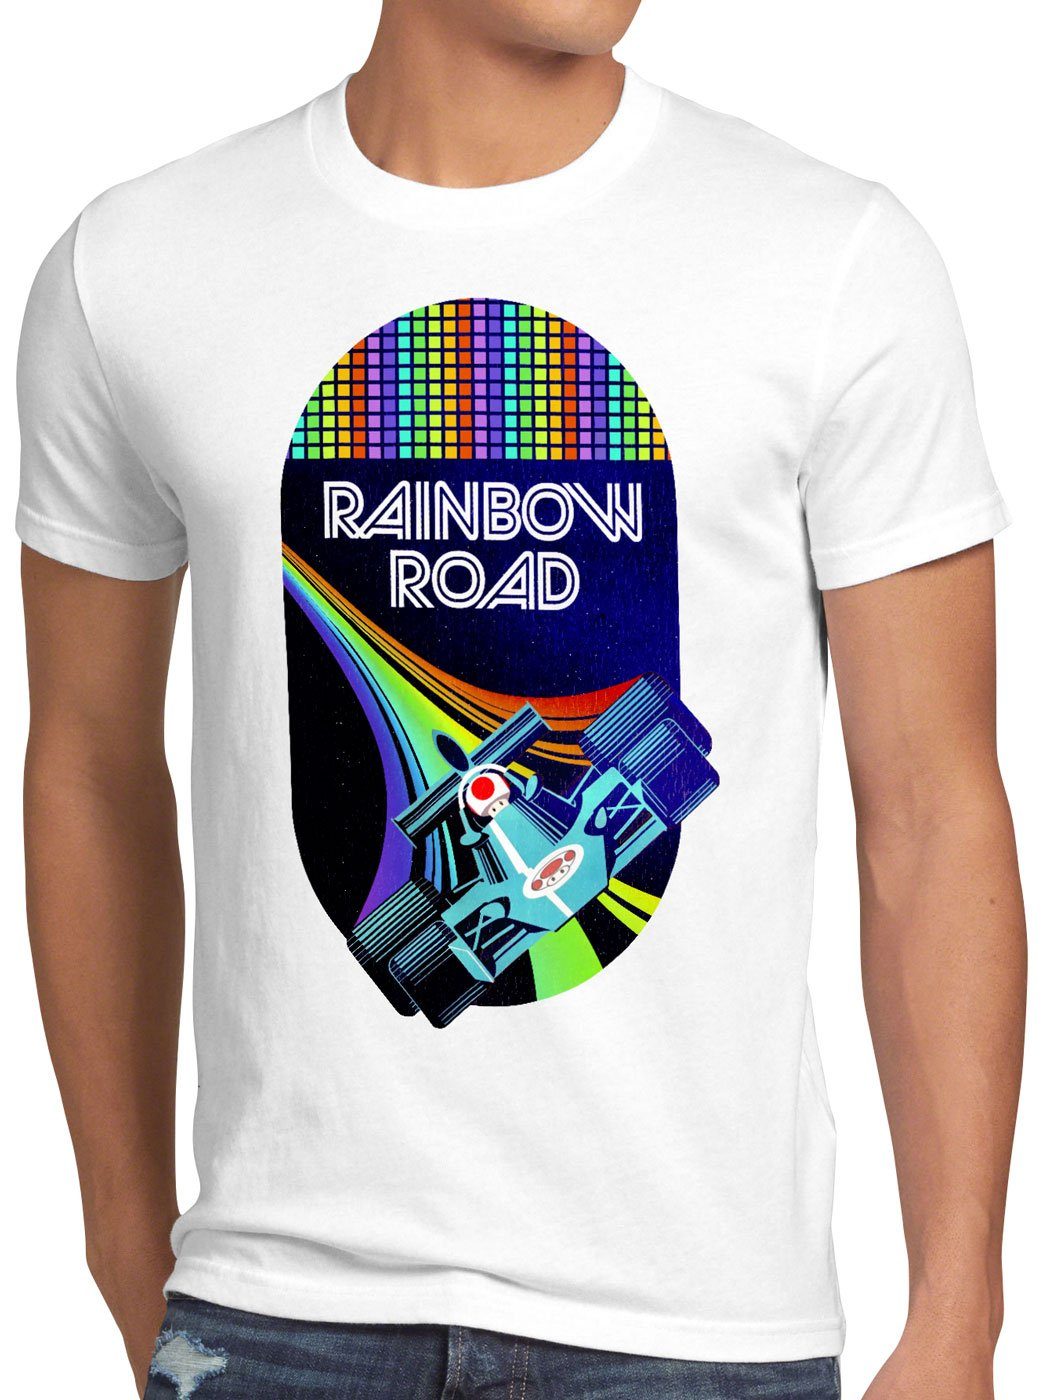 gp double dash Print-Shirt T-Shirt Road kart Rainbow tour mario style3 Herren weiß